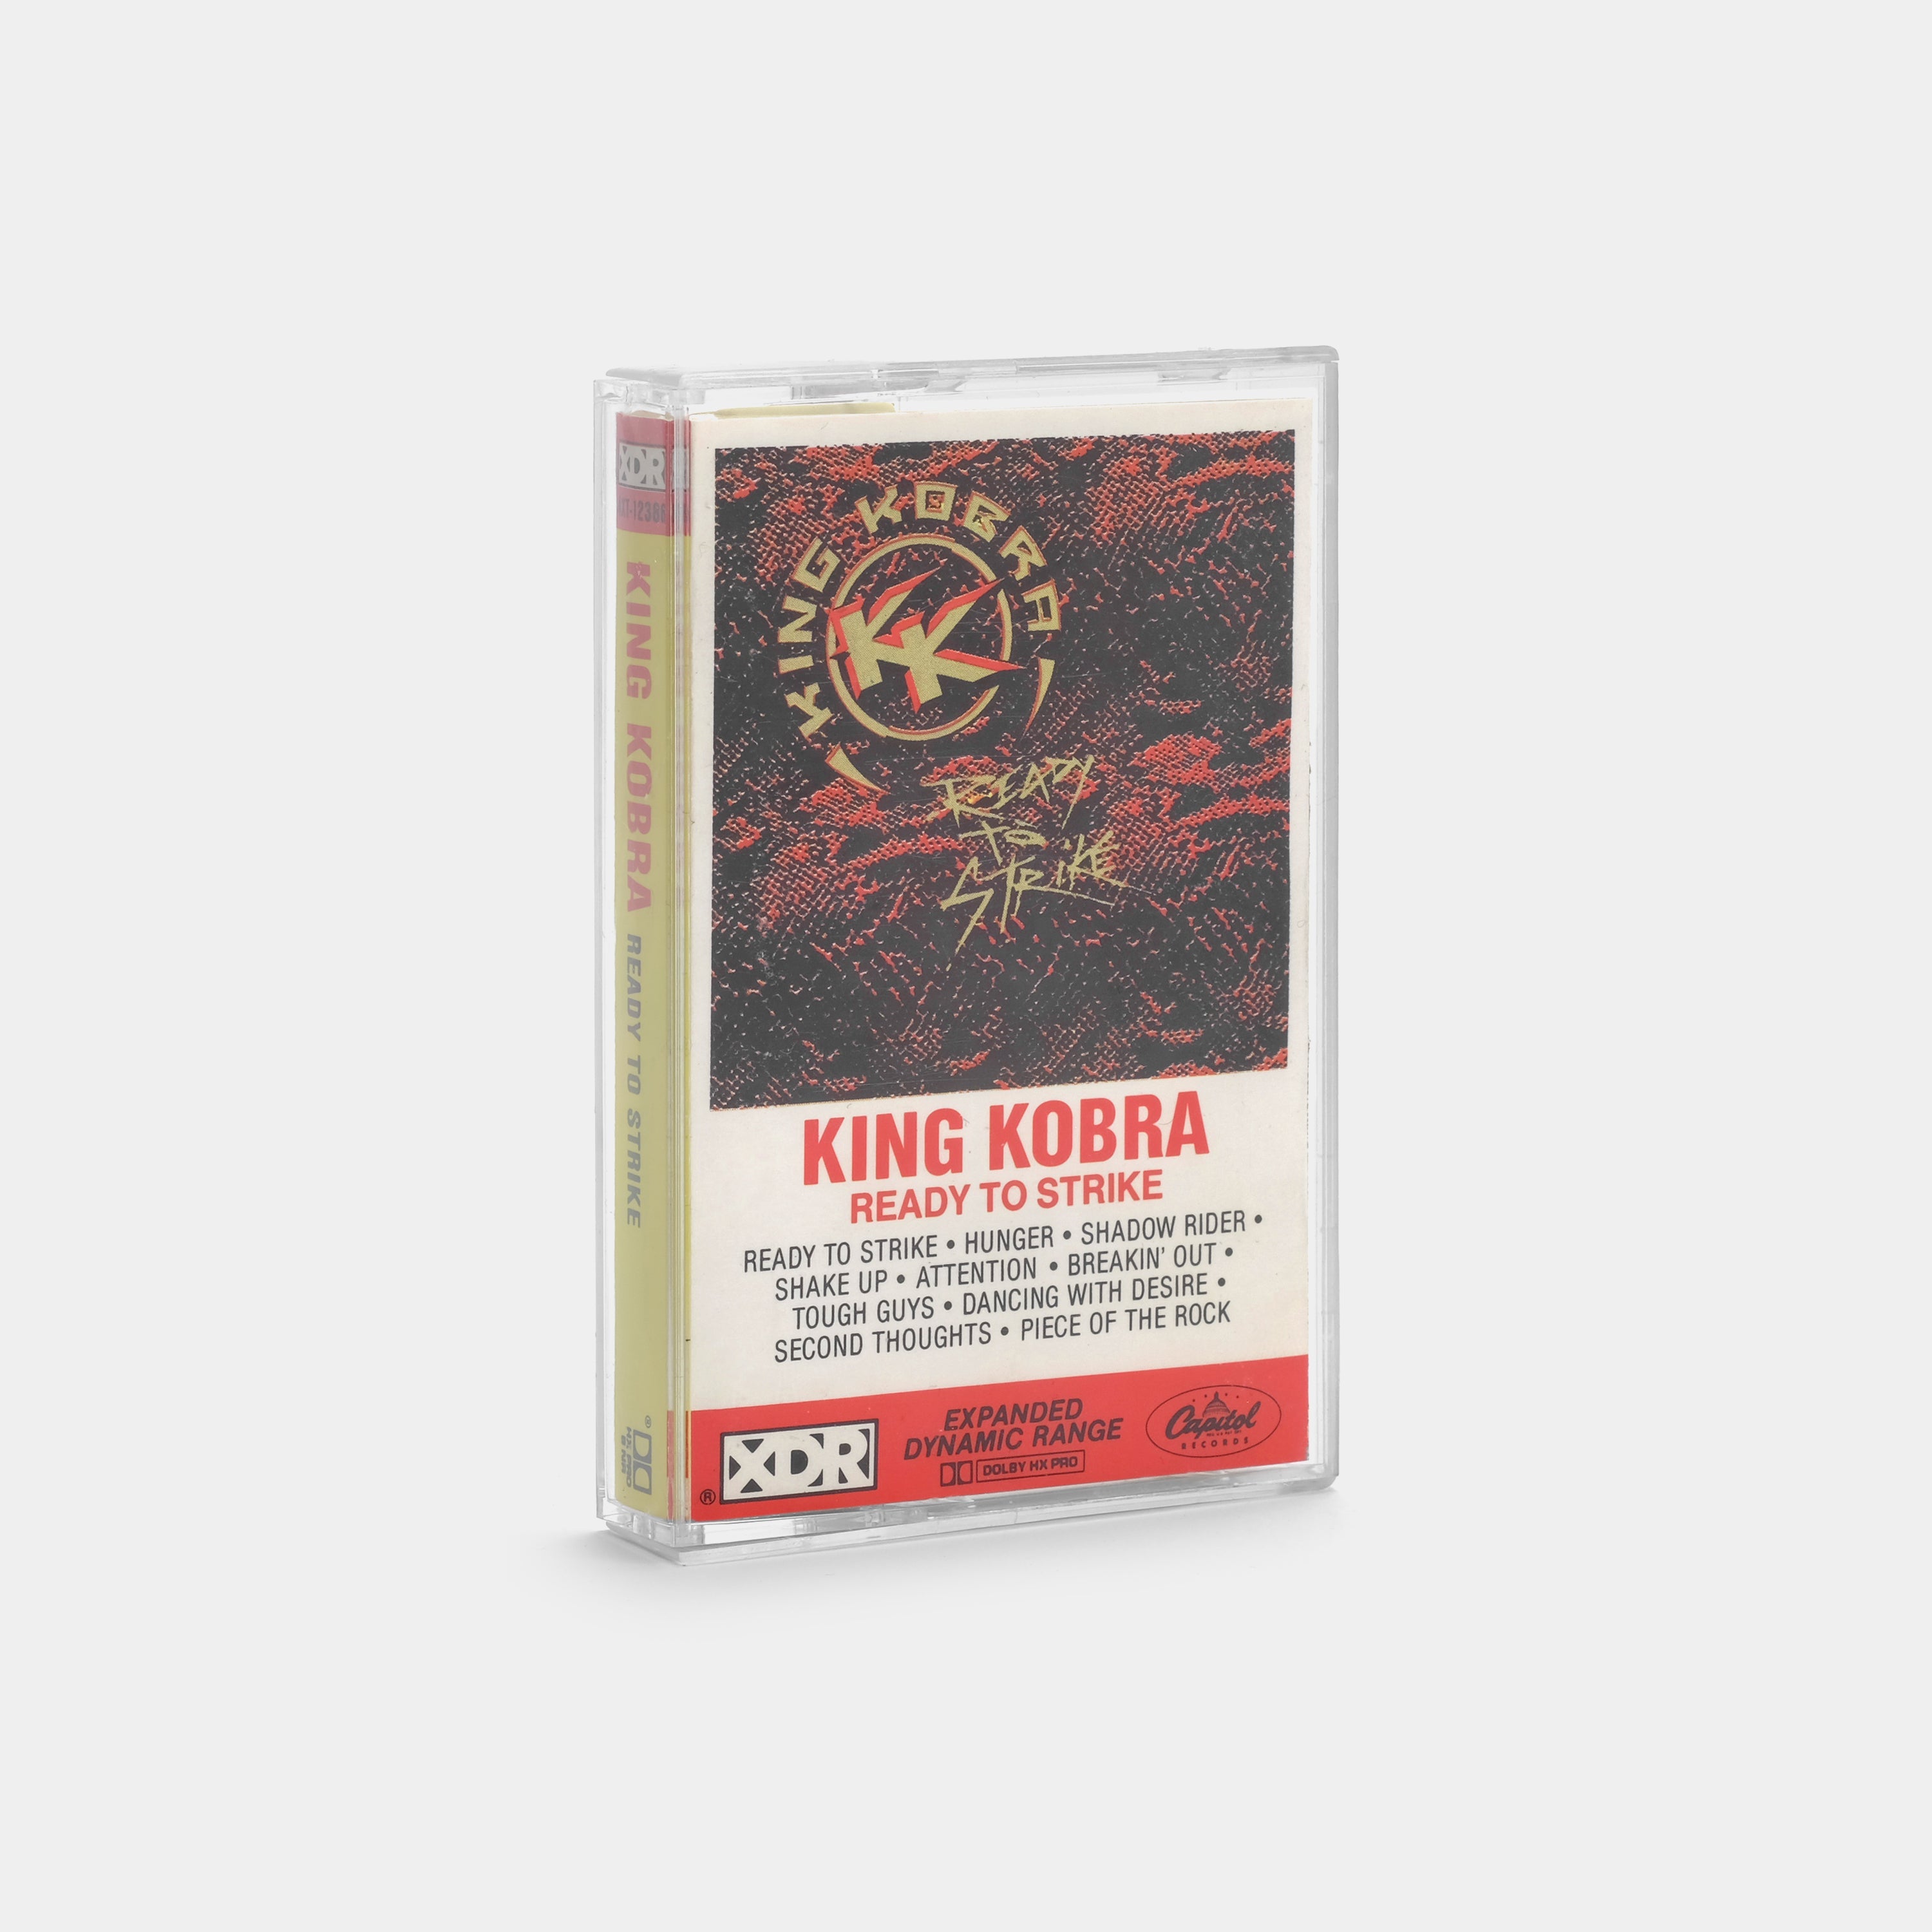 King Kobra - Ready To Strike Cassette Tape